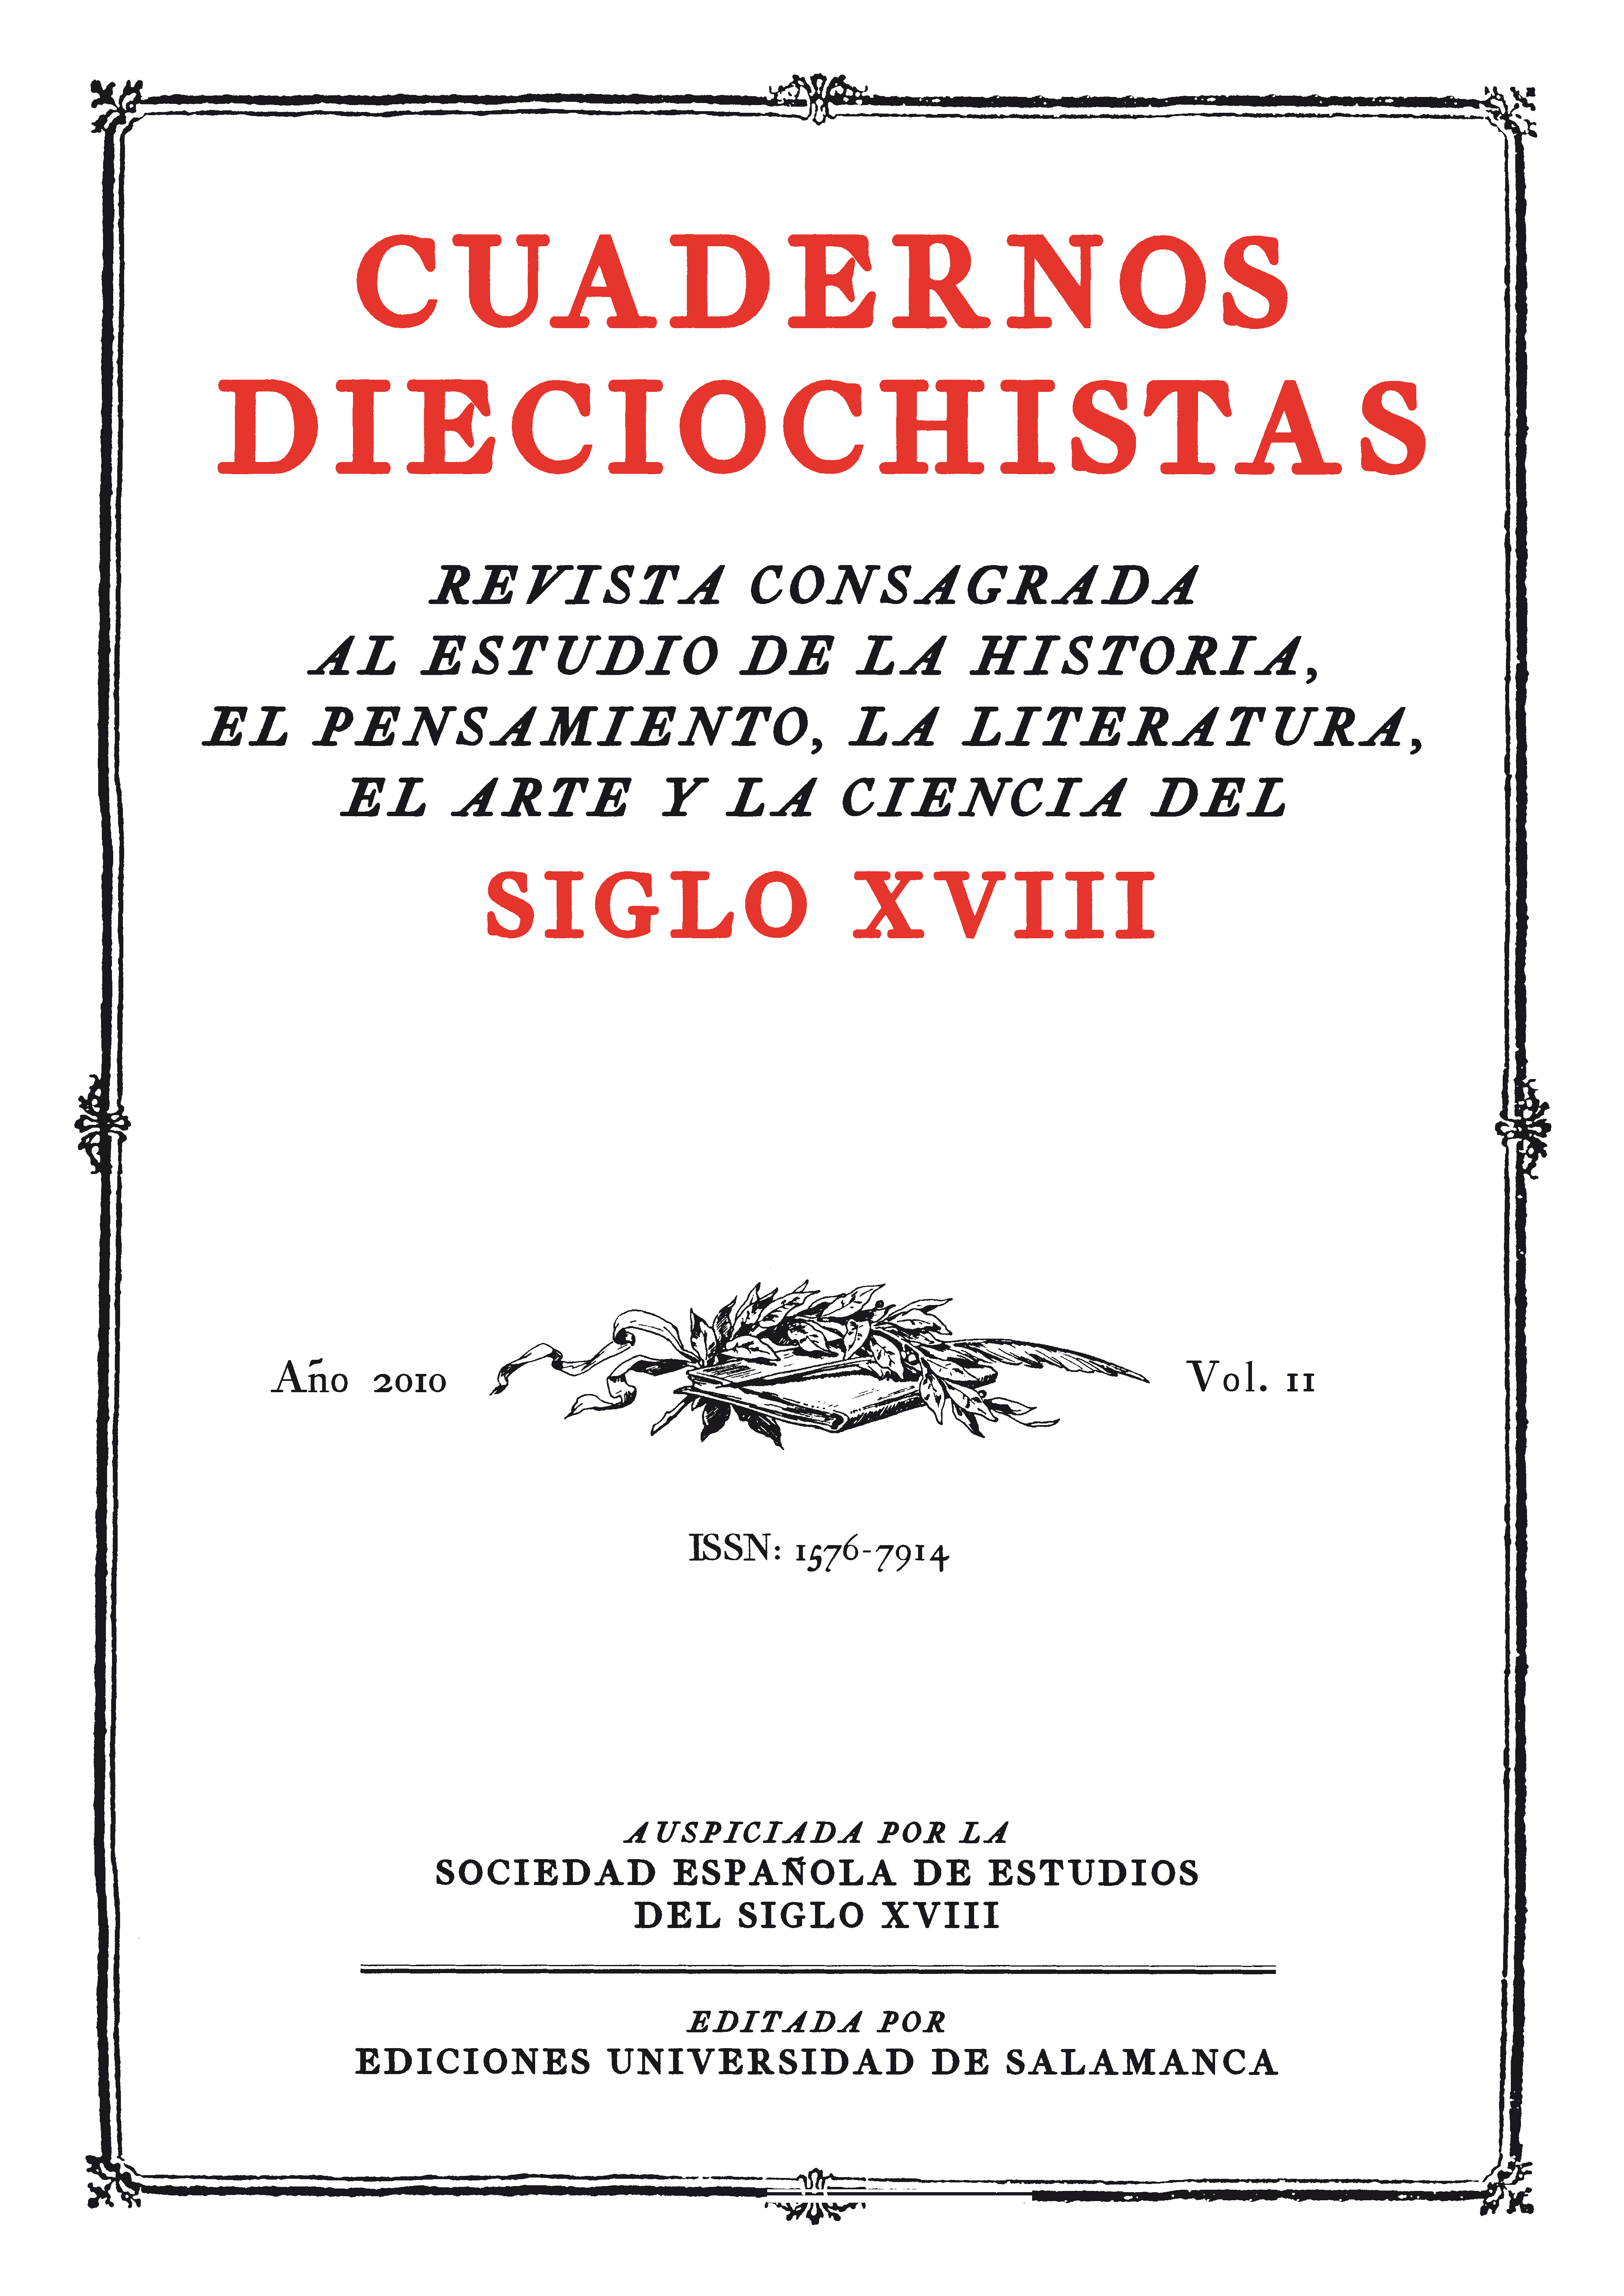                         Ver Vol. 11 (2010): Jovellanos (1744-1811)
                    